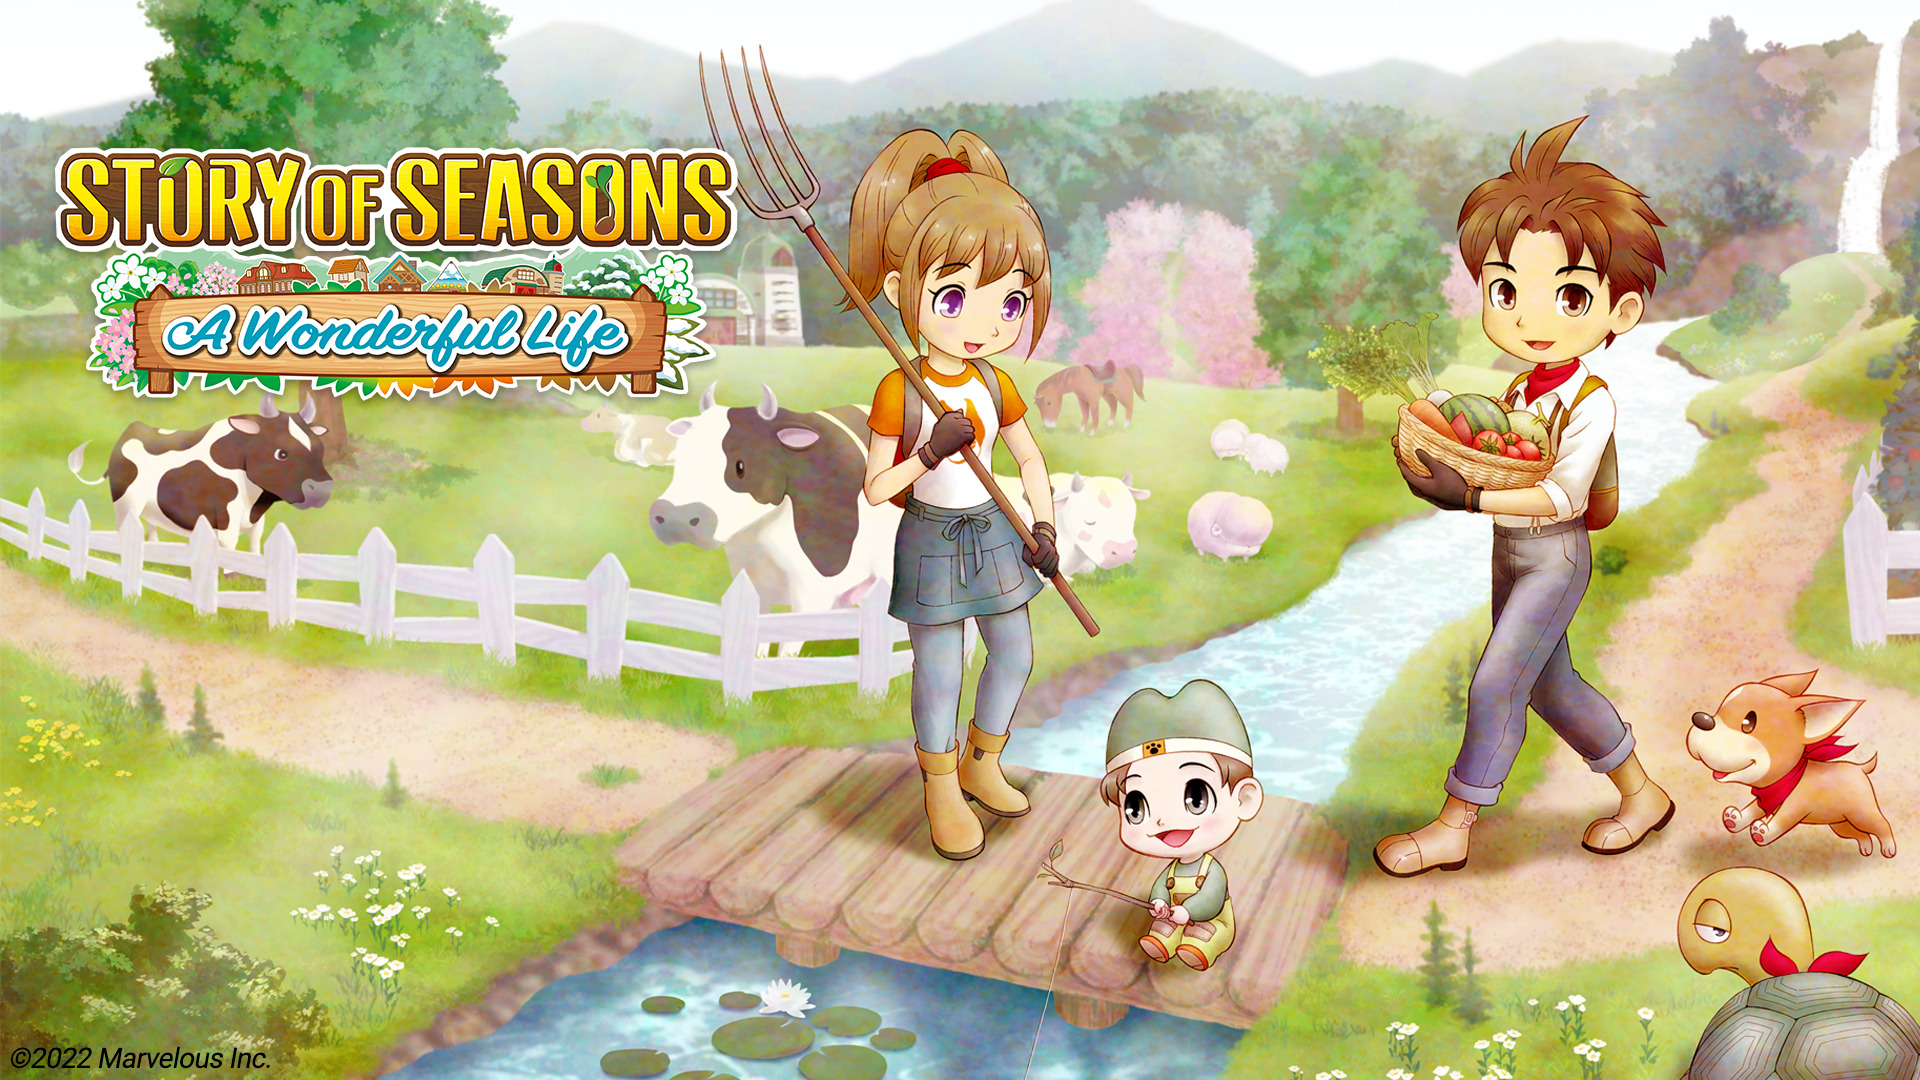 Story of Seasons A Wonderful Life ฉบับ Remake เตรียมขายบน Switch ปี